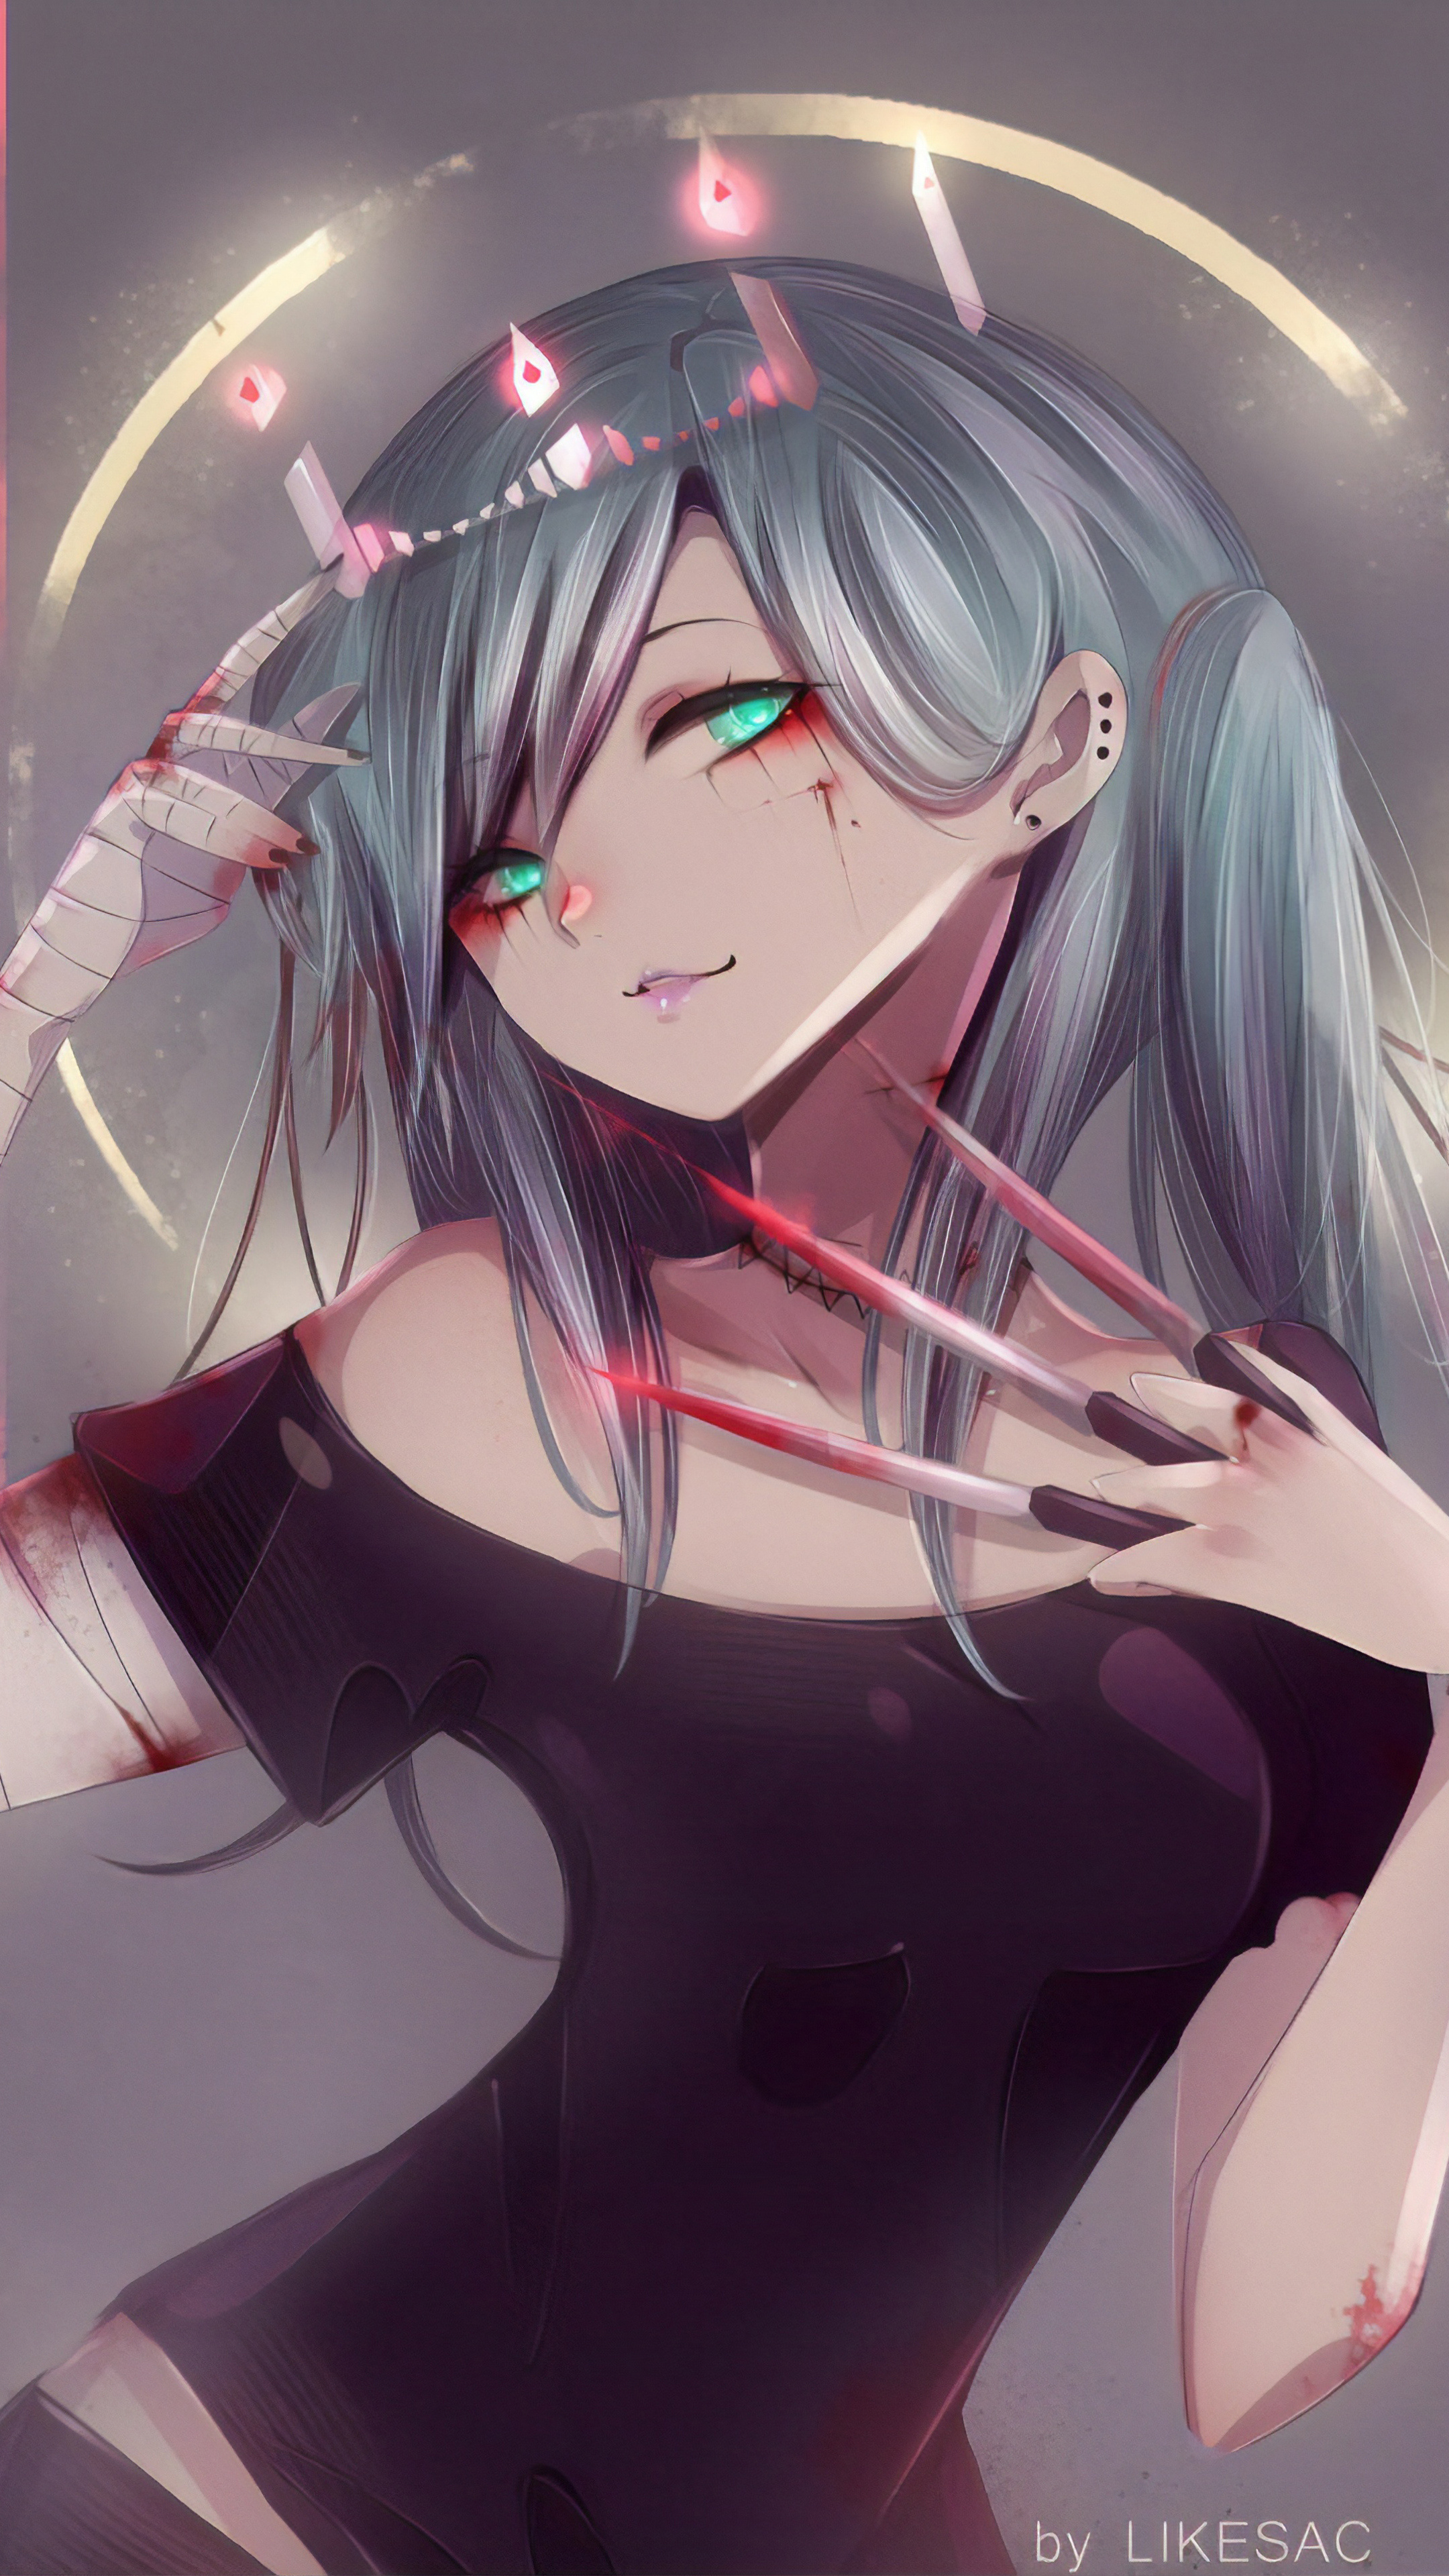 Gothic Anime: Creepy goth girl, Dark art, Blood on the knives, Tiara, Wounds, Manga. 2160x3840 4K Background.